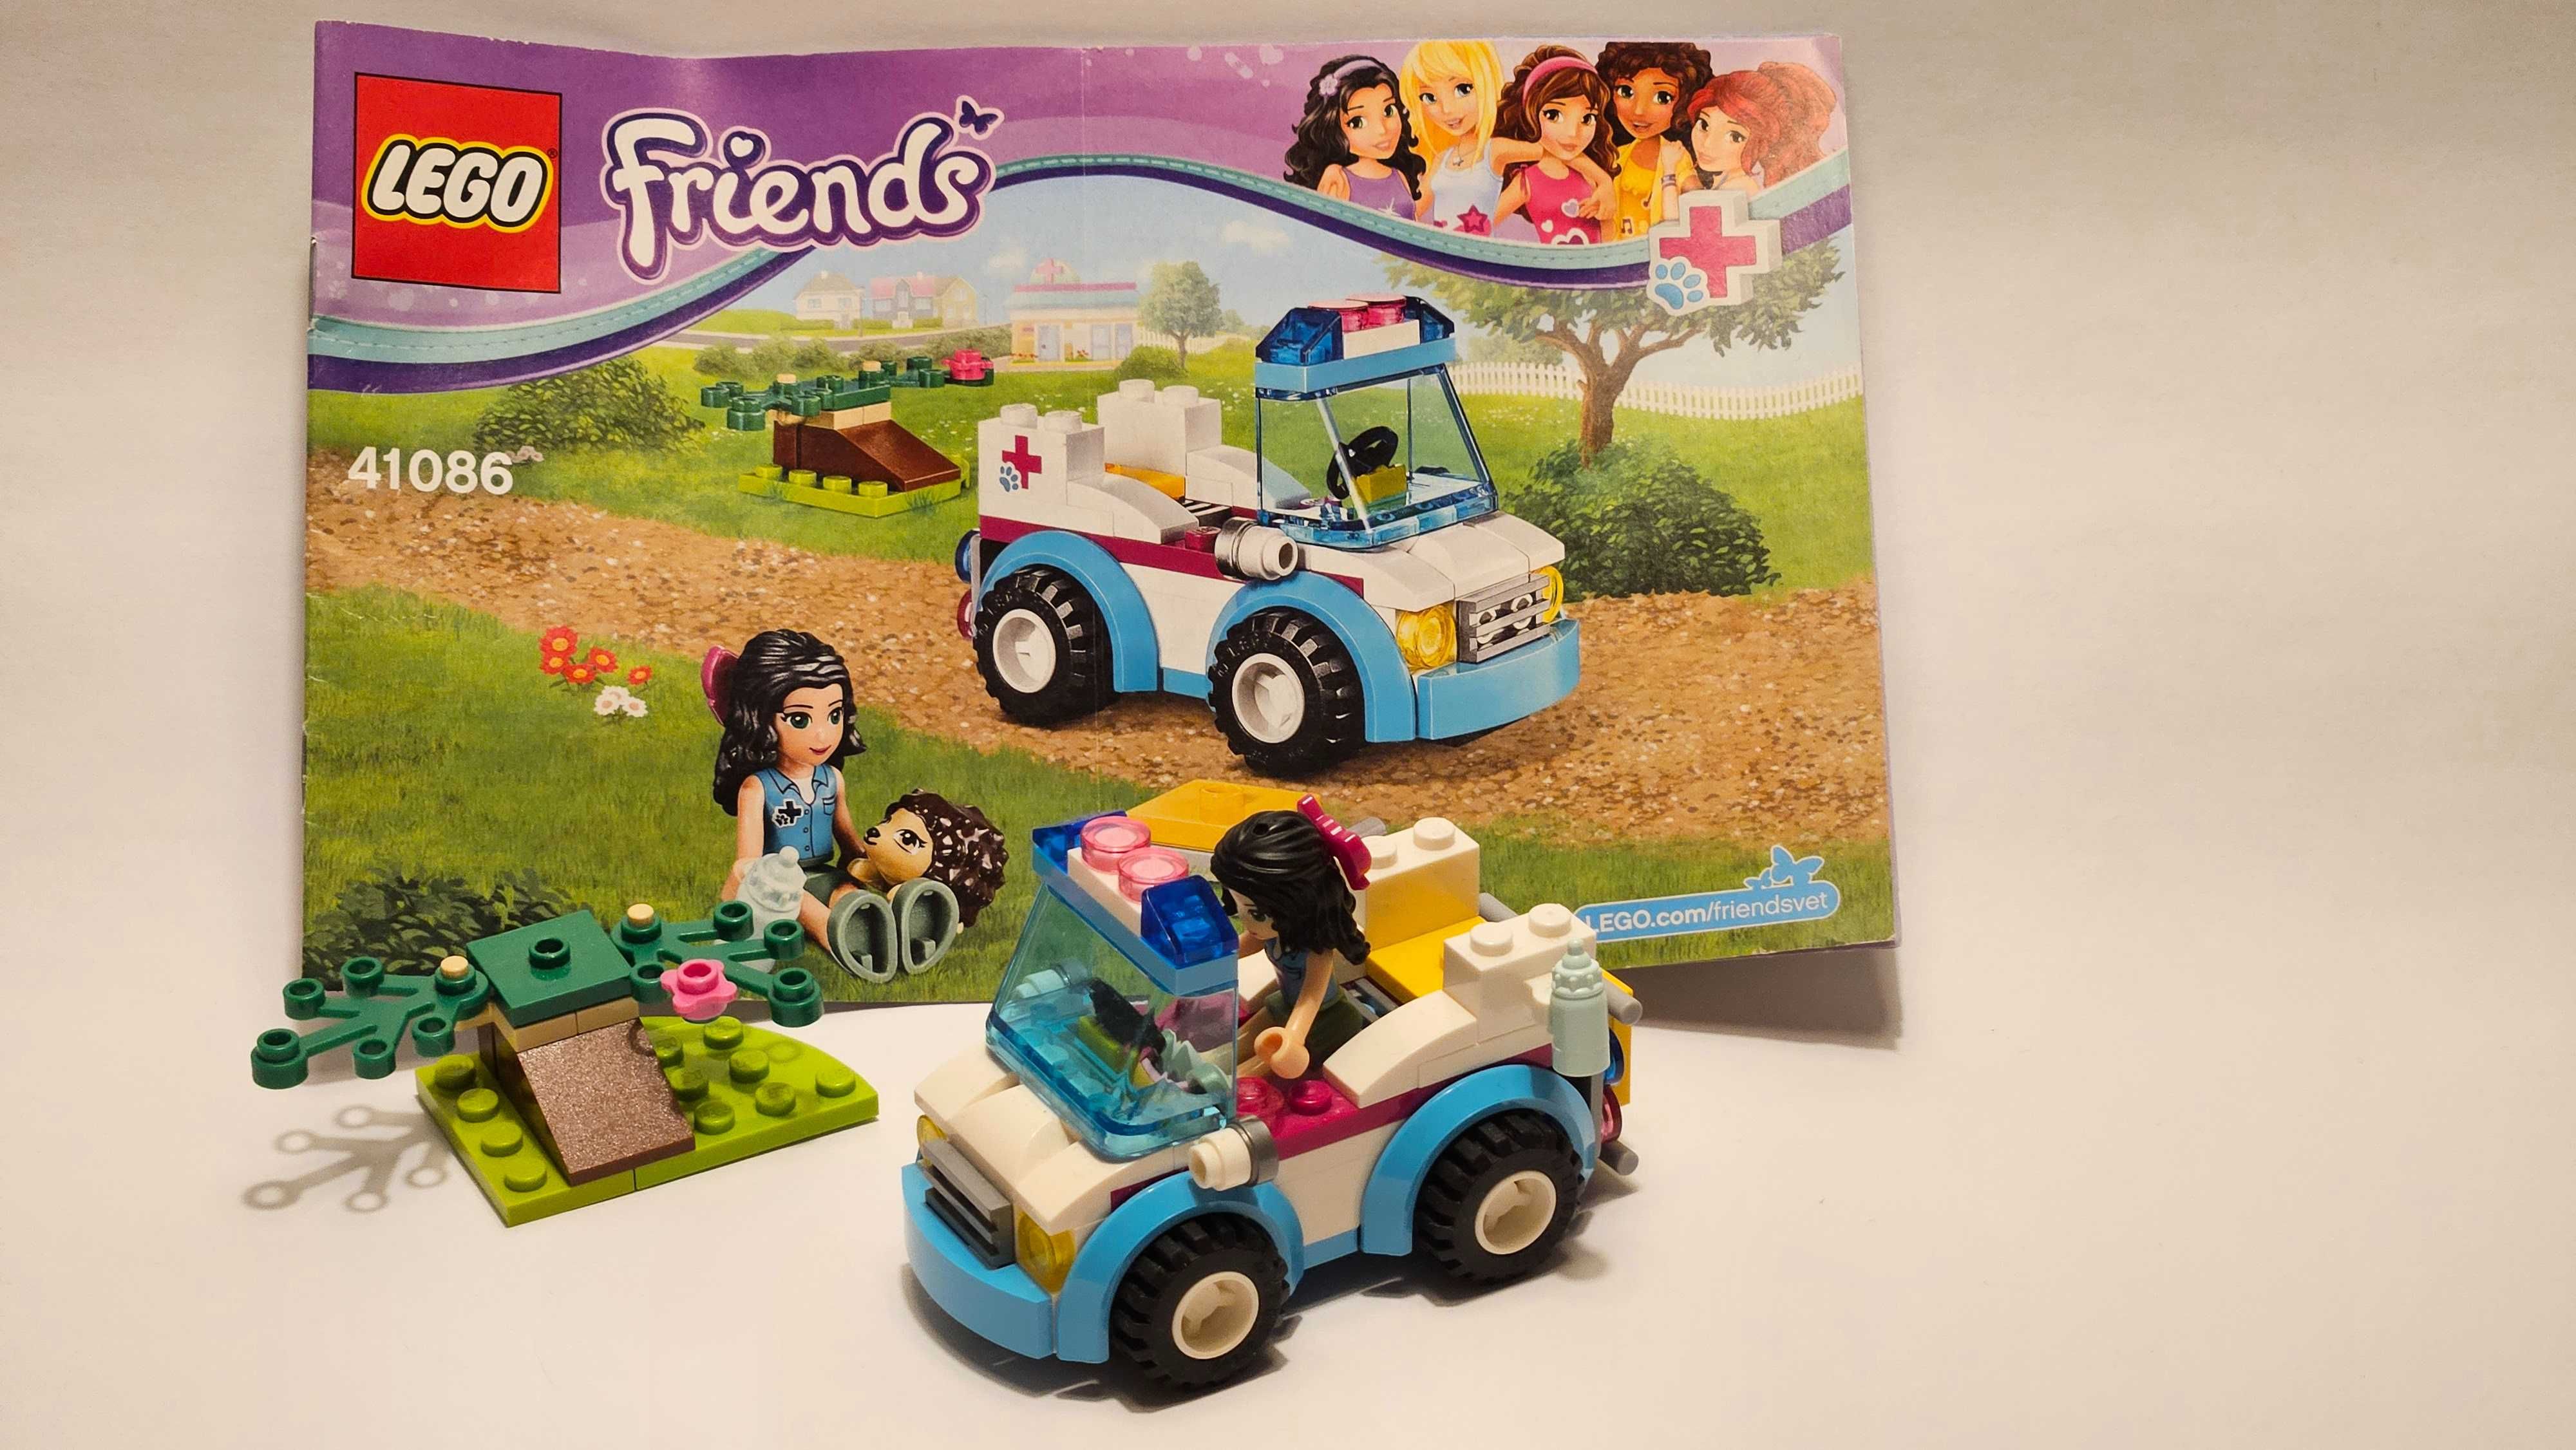 LEGO Friends zestawy - 3935, 3930, 3936, 41021, 41114, 41022, 41086